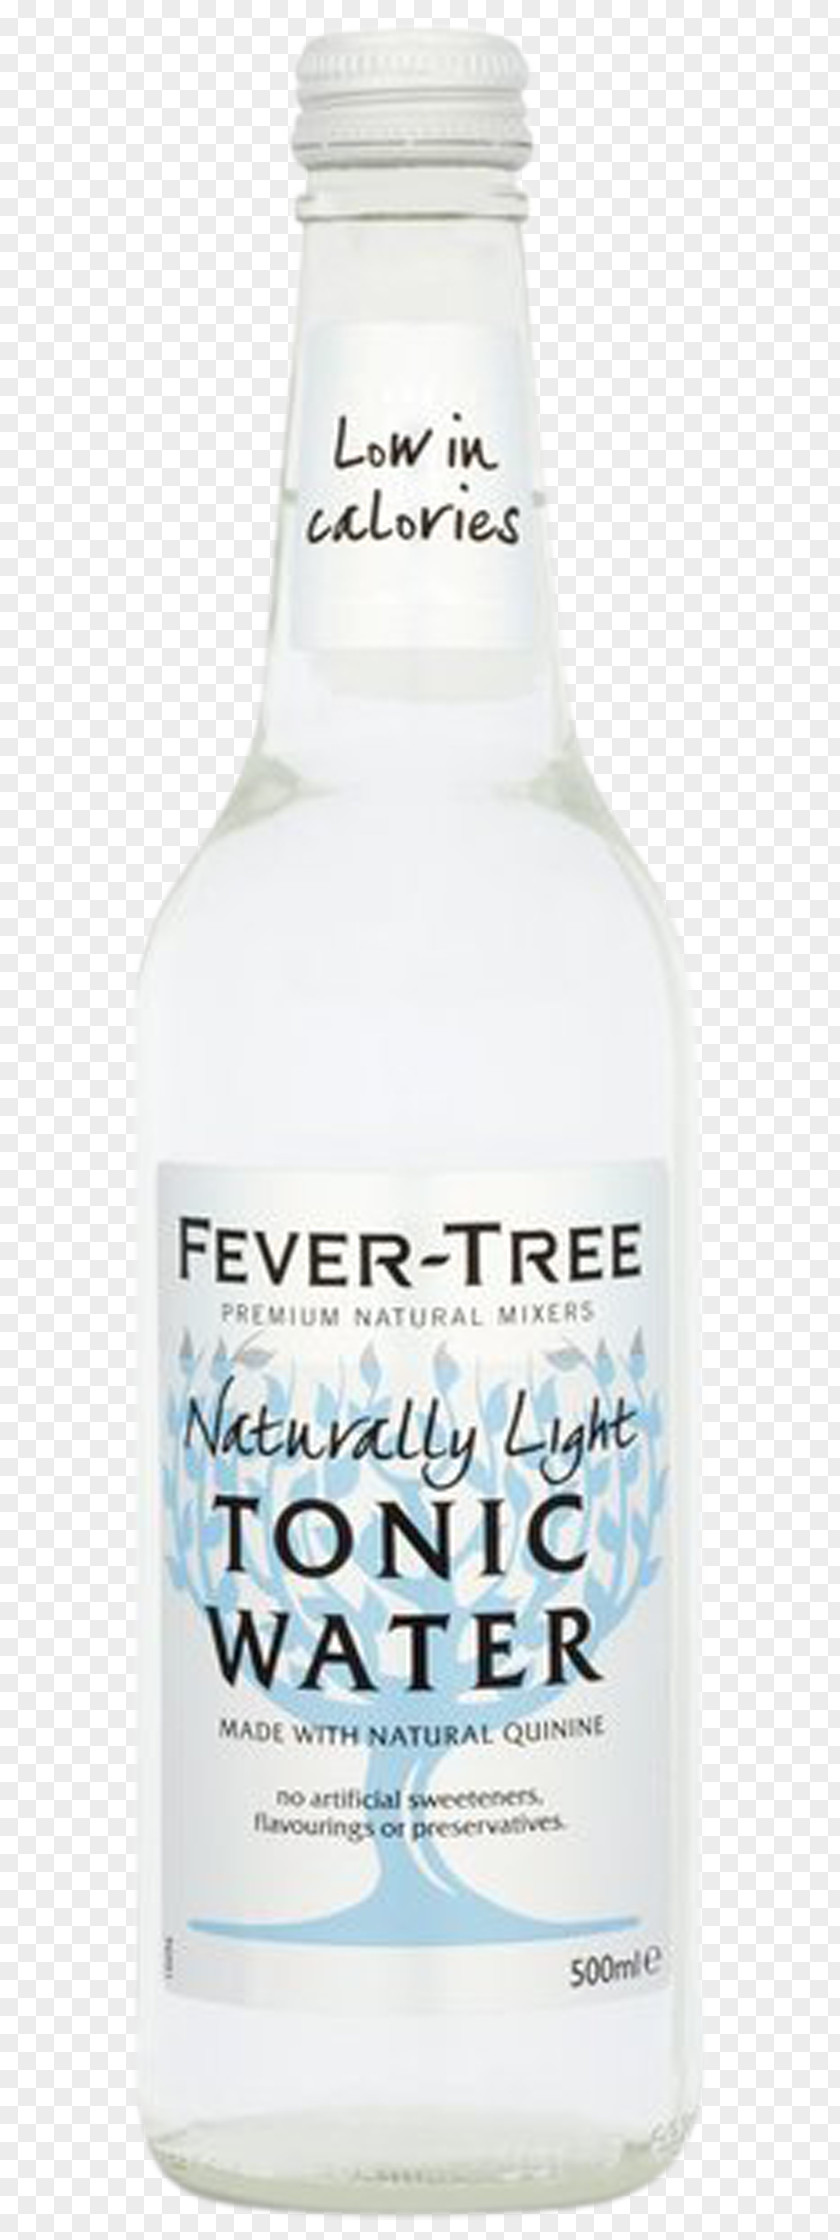 Vodka Tonic Water Liqueur Fever-Tree Ounce PNG